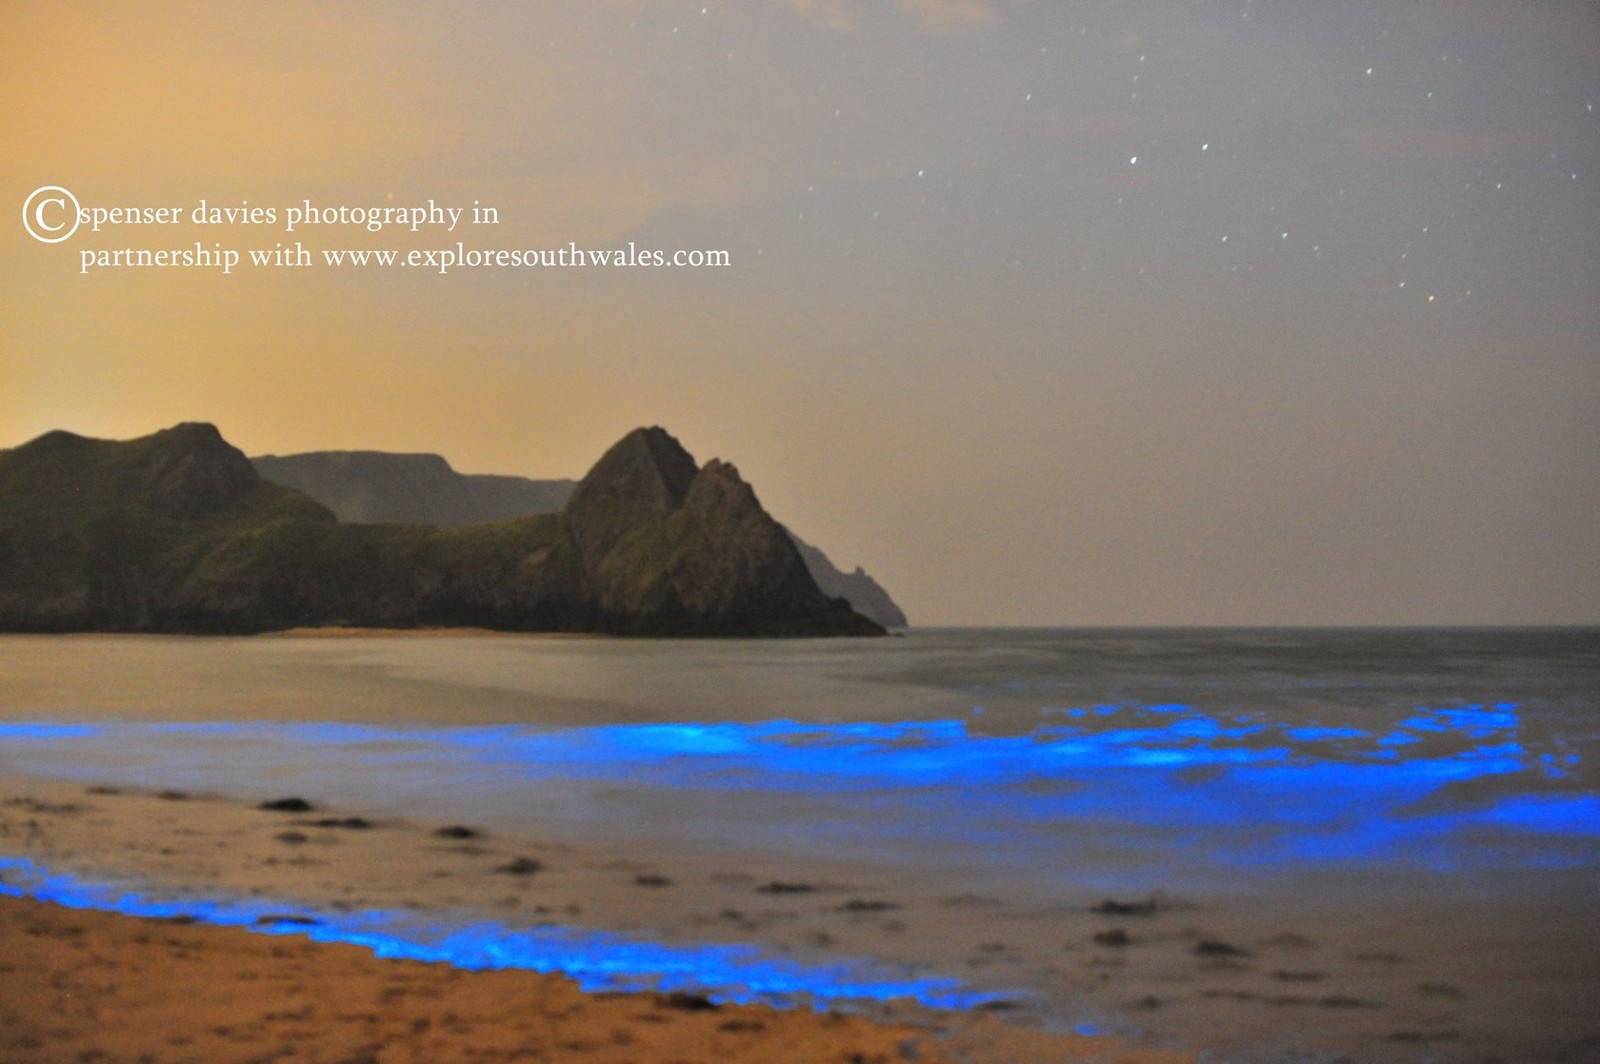 21/6/17 , Three Cliffs Bay, Gower 2am swim in bioluminescent plankton